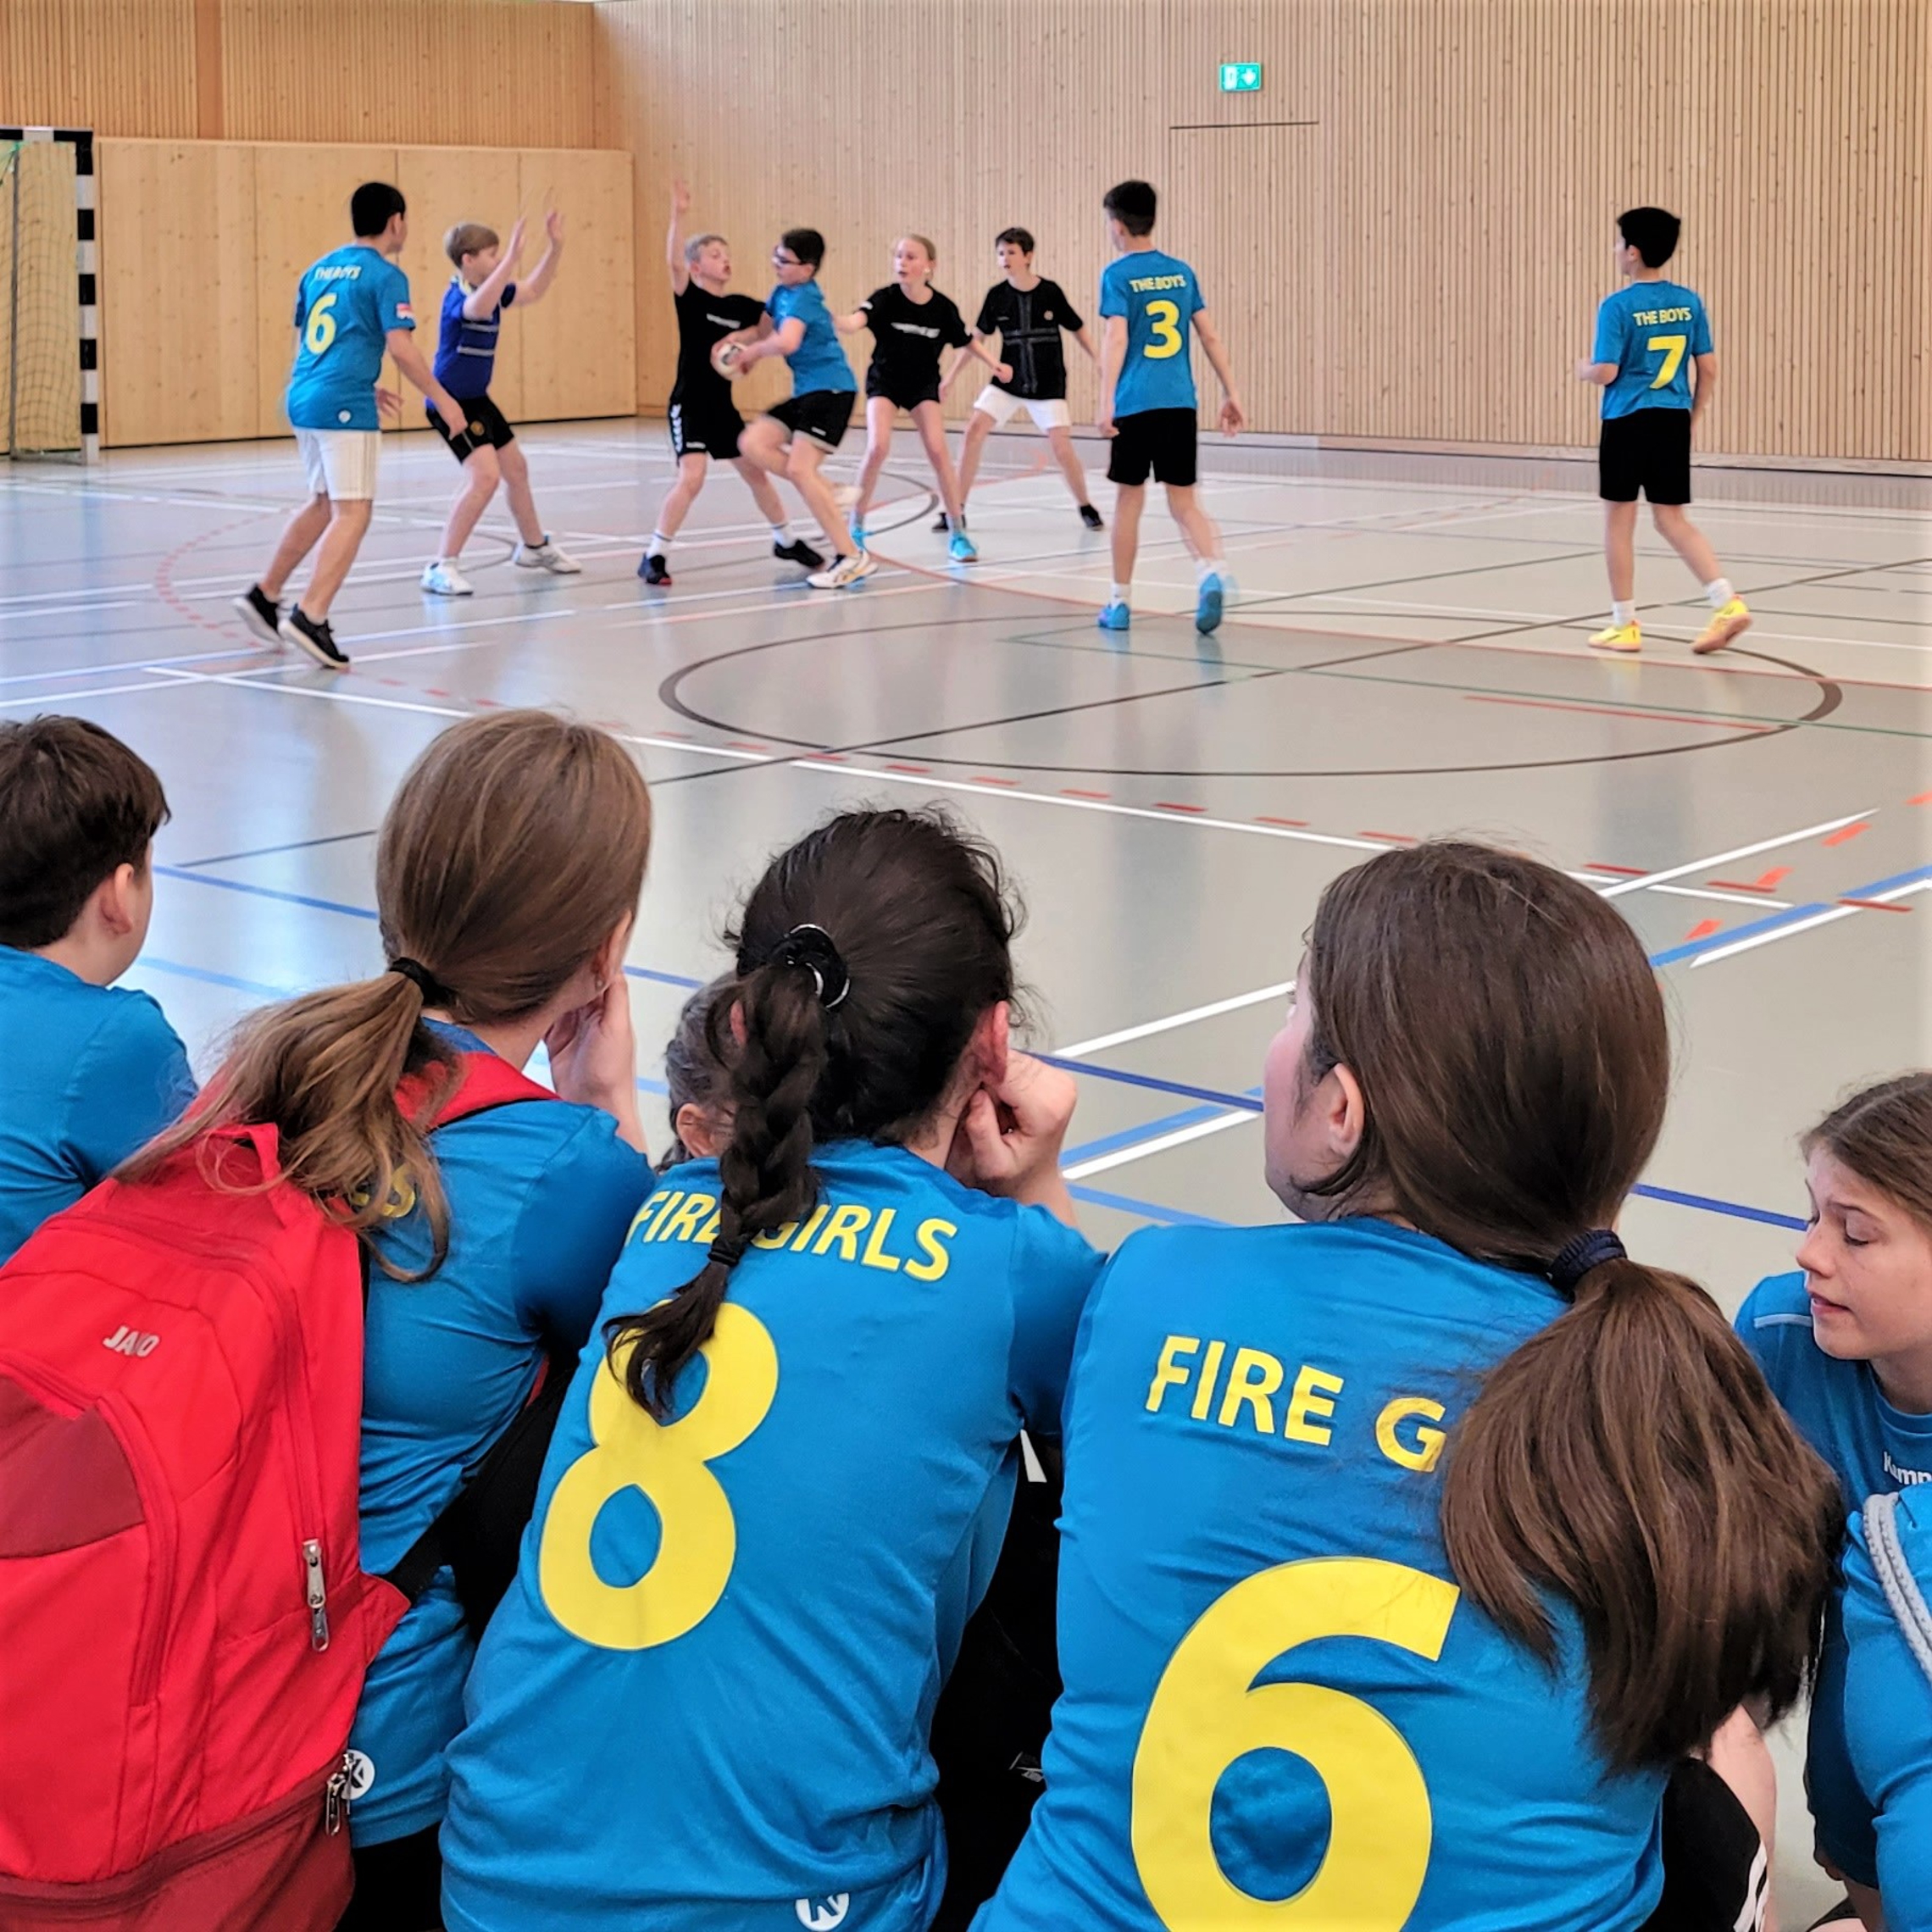 Schulhandball: Regionale Meisterschaften im vollen Gang - Handball Schweiz